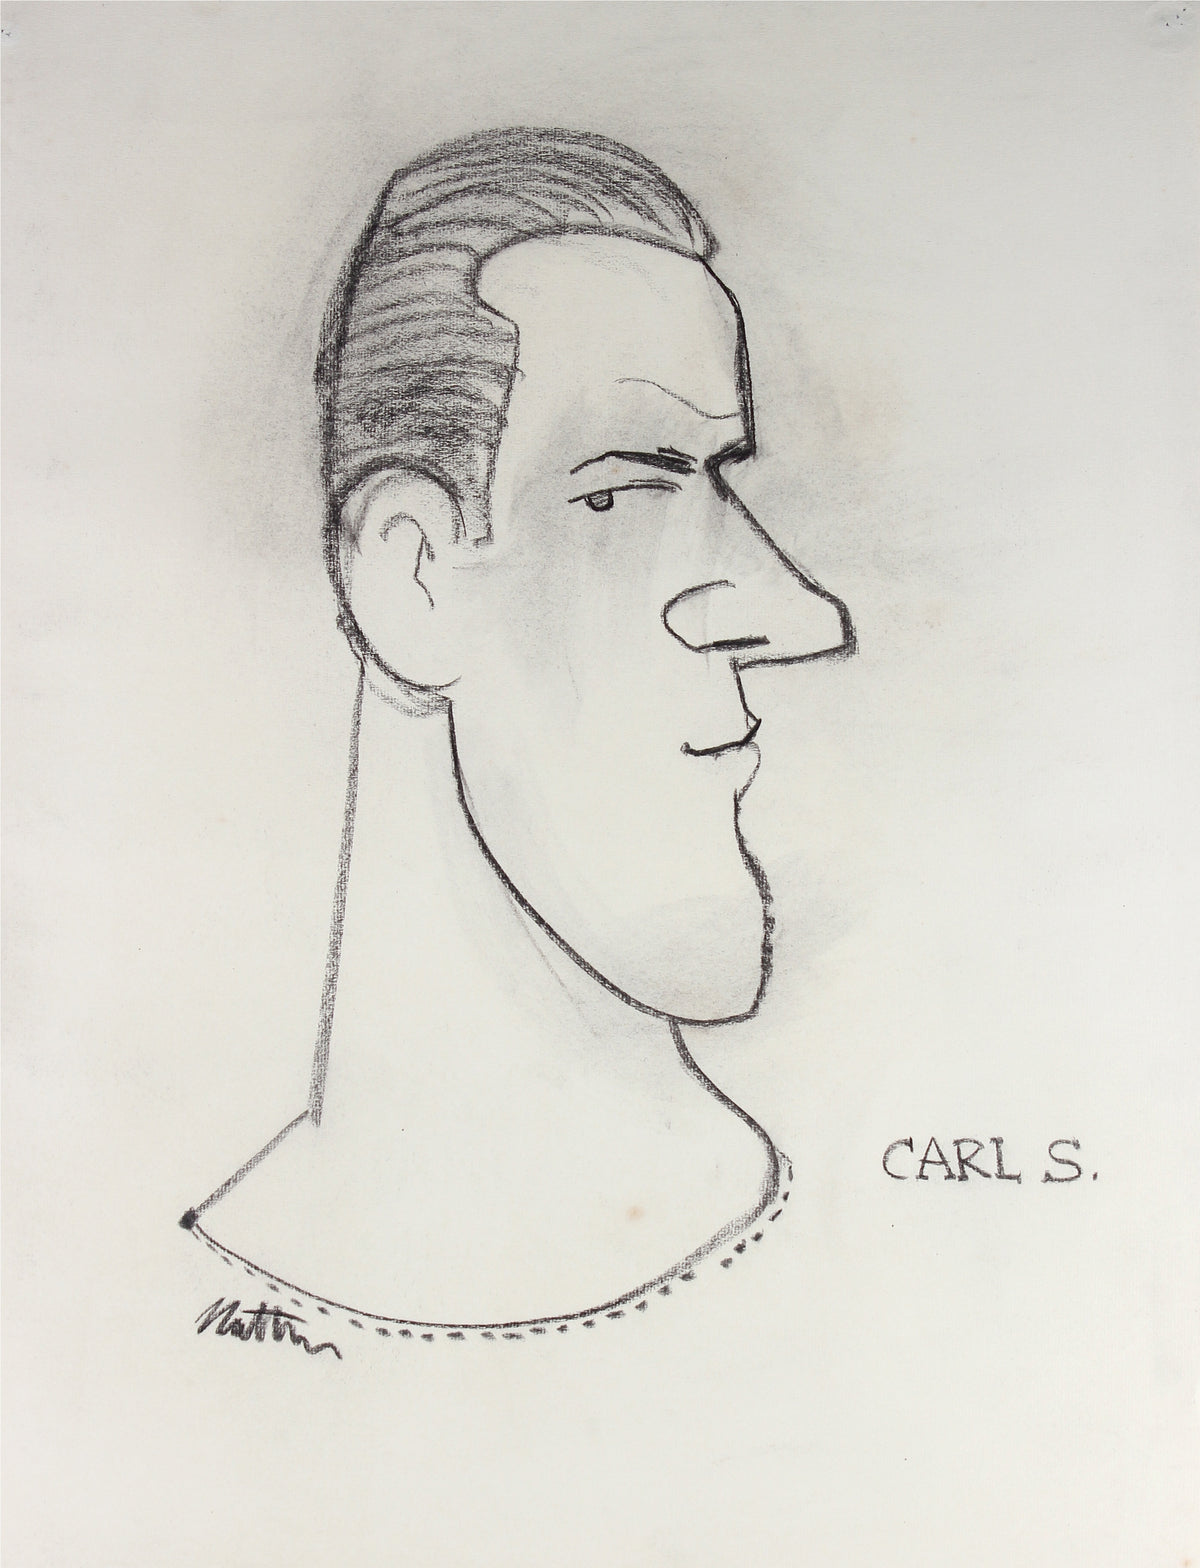 &lt;i&gt;Carl S.&lt;/i&gt; &lt;br&gt;1945 Charcoal &lt;br&gt;&lt;br&gt;#35146